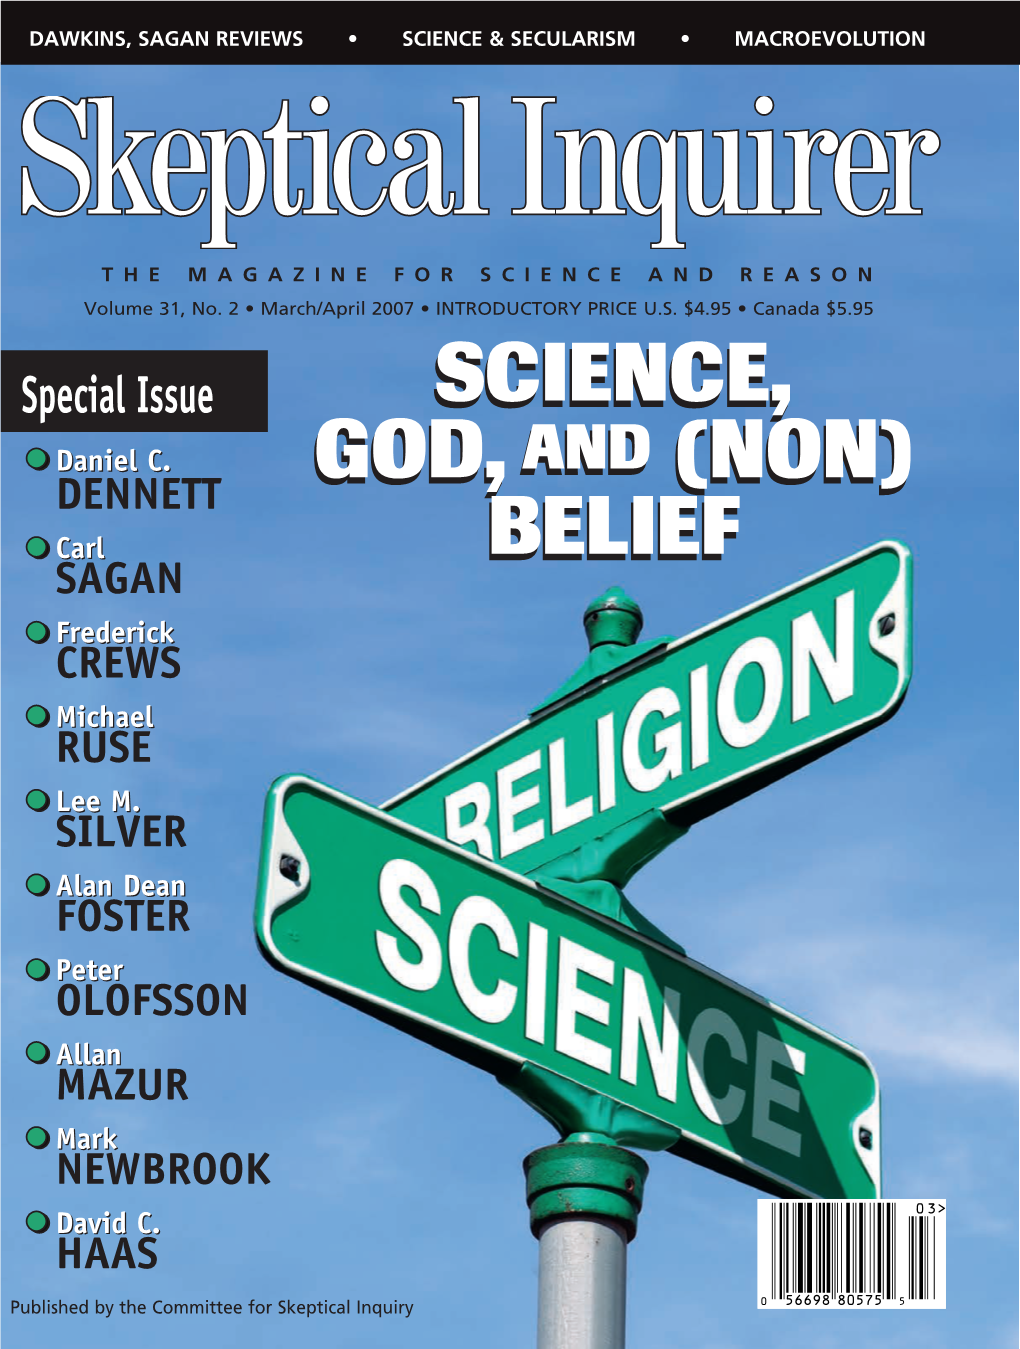 (Non) Belief Science, God